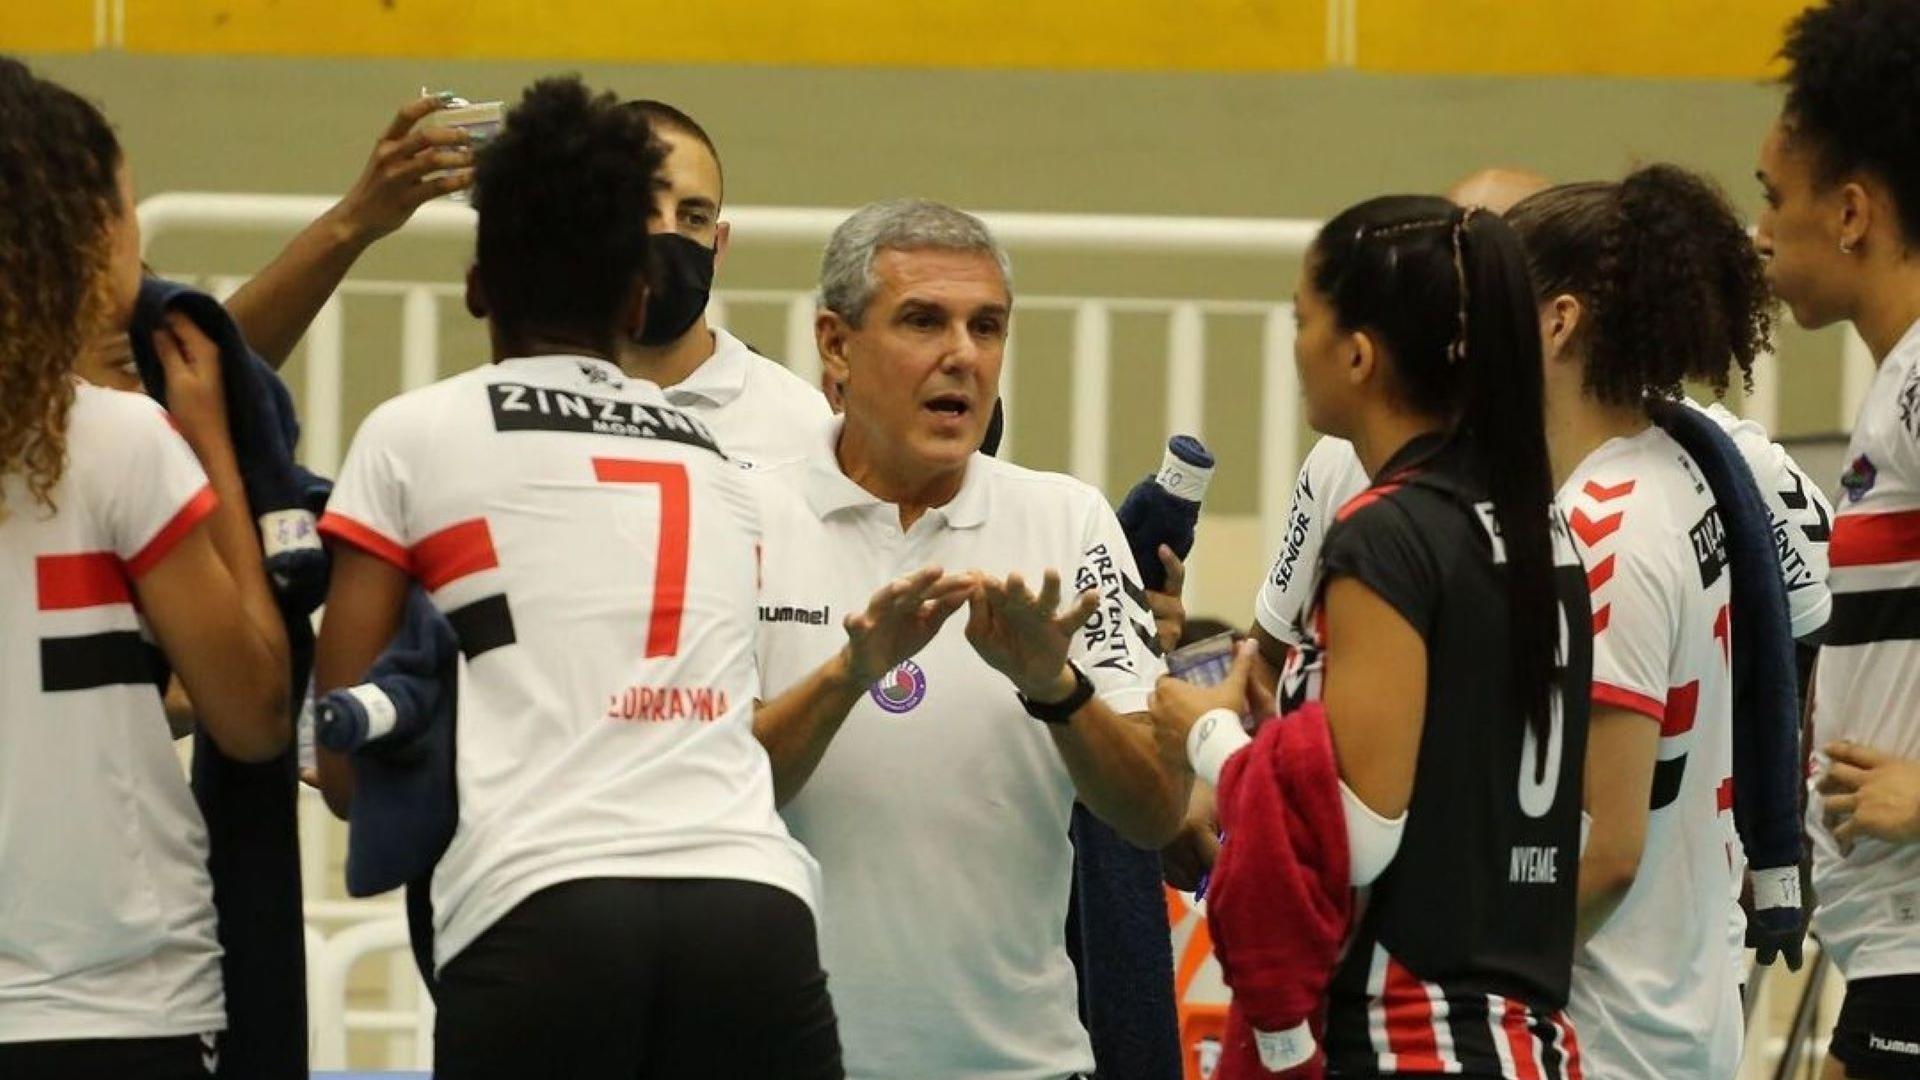 Zé Roberto Guimarães orienta o time do São Paulo/Barueri